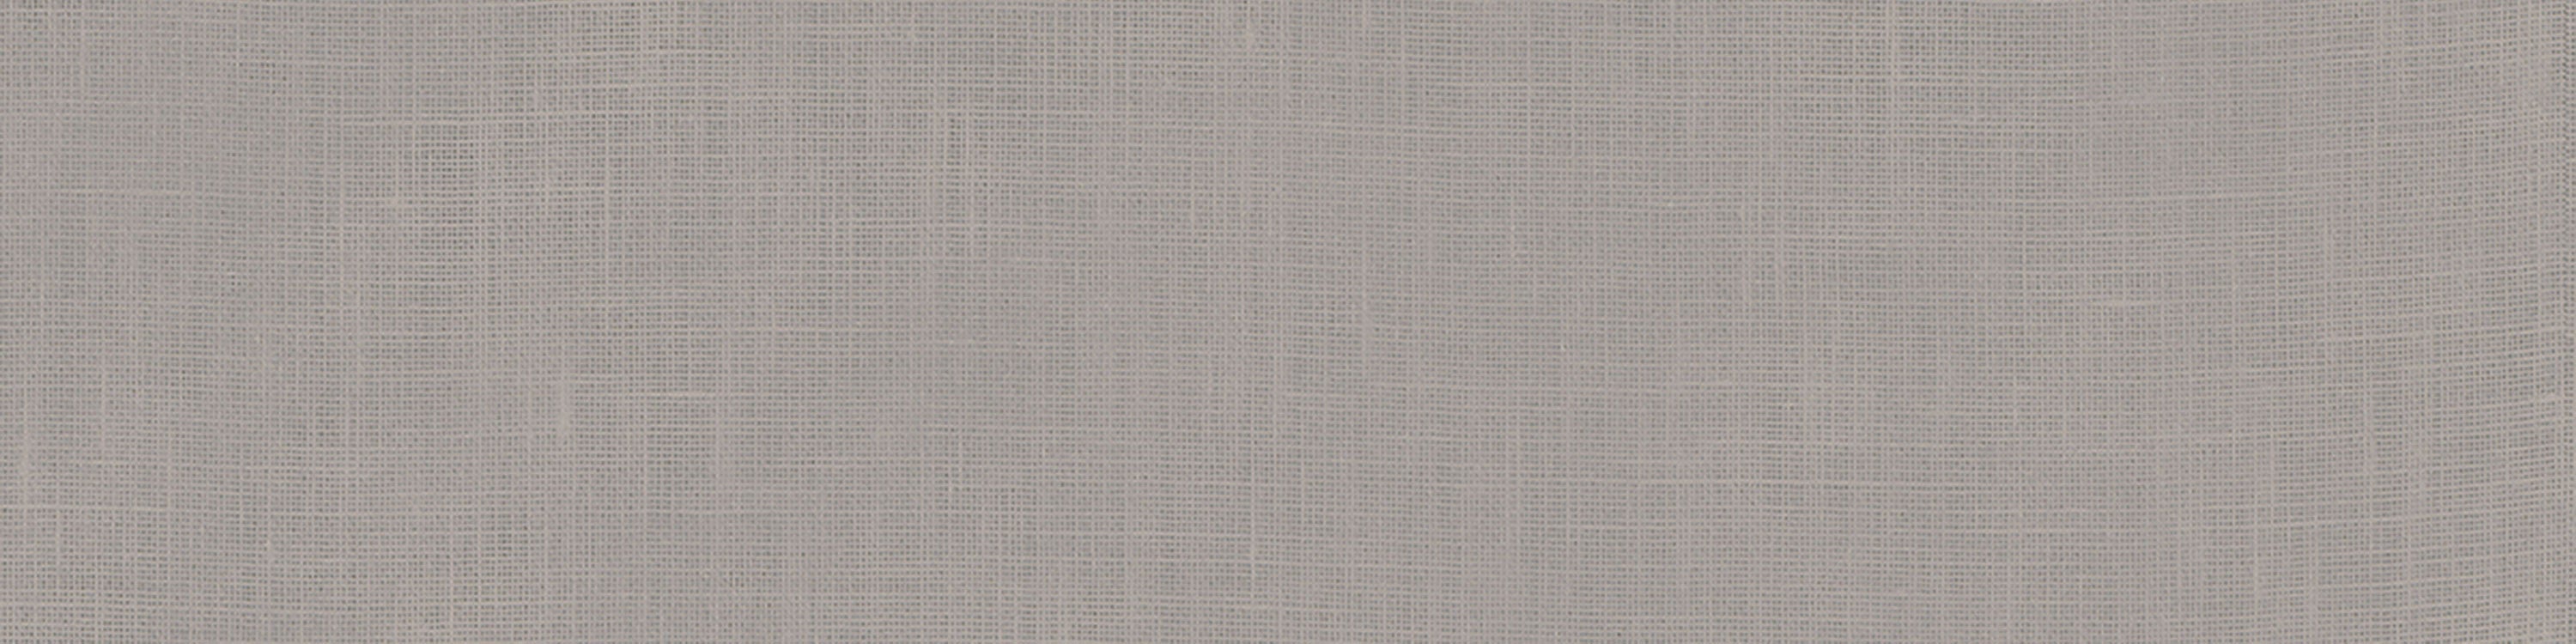 landmark 9mm soul dw silver wool field tile 6x24x9mm matte rectified porcelain tile distributed by surface group international